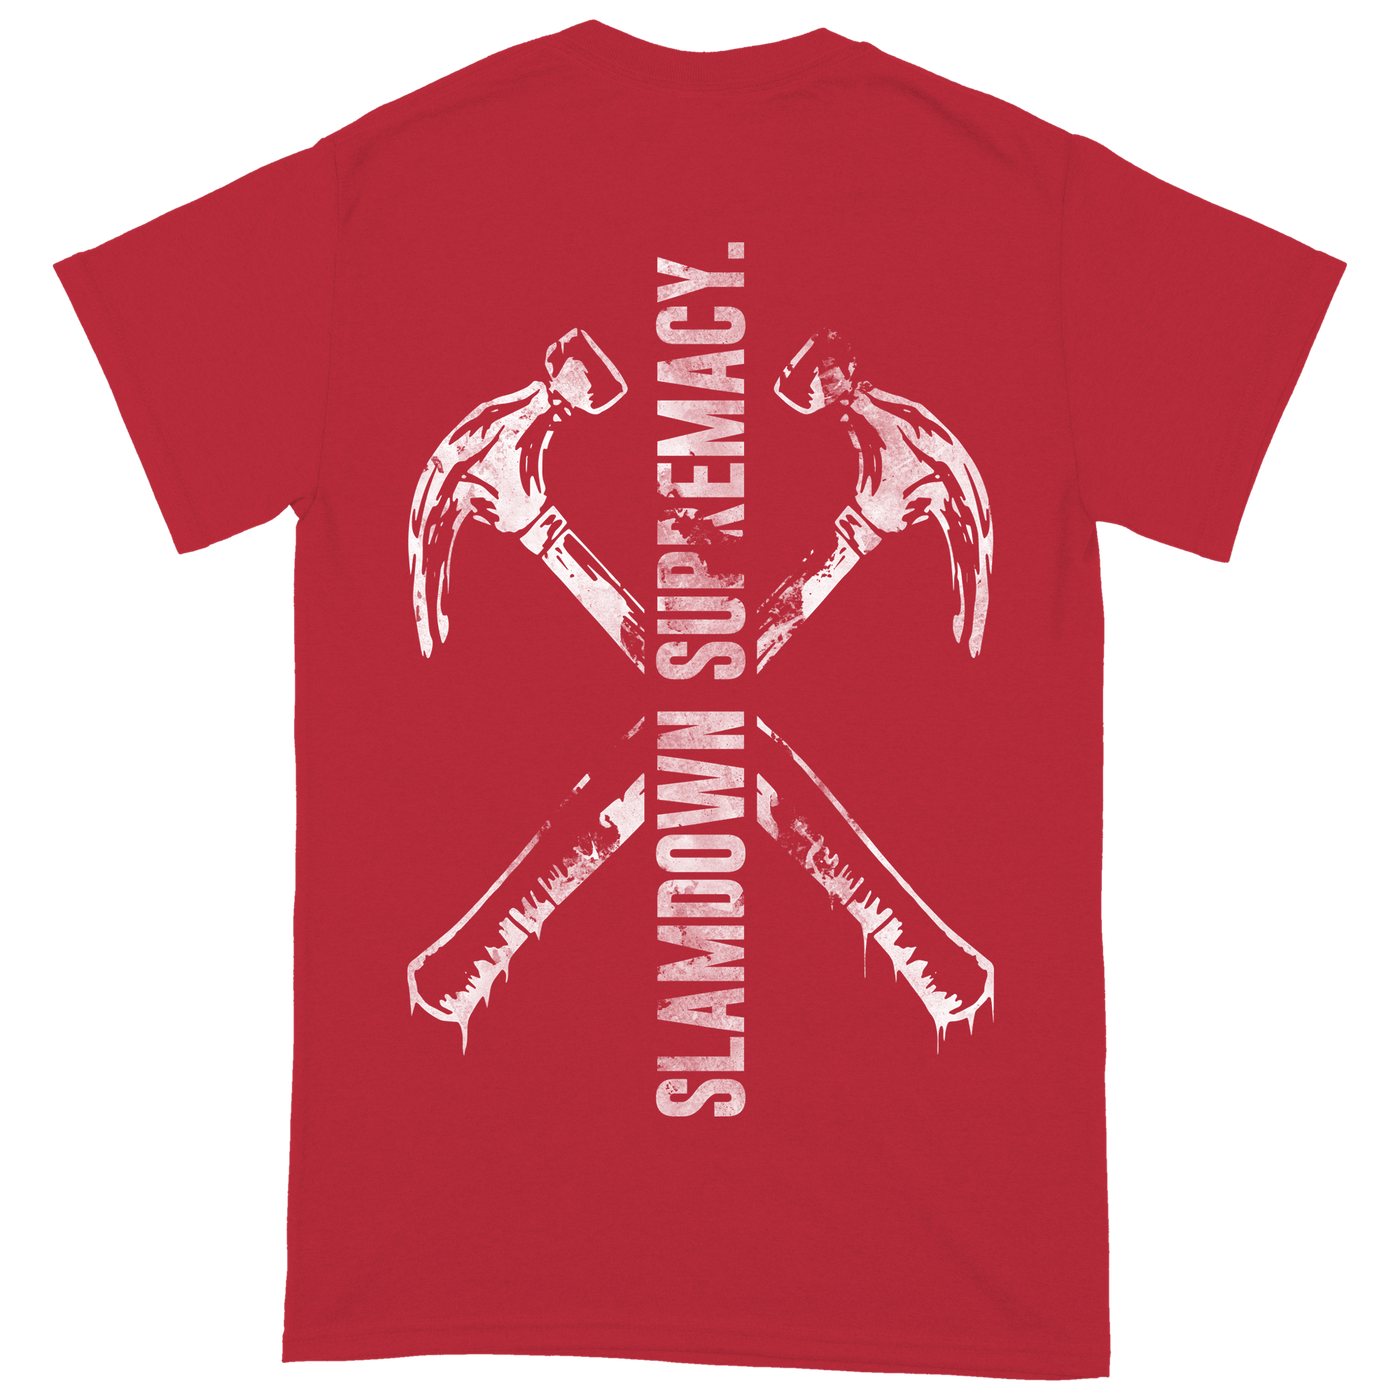 Gutrectomy 'Slamdown Supremacy' T-Shirt